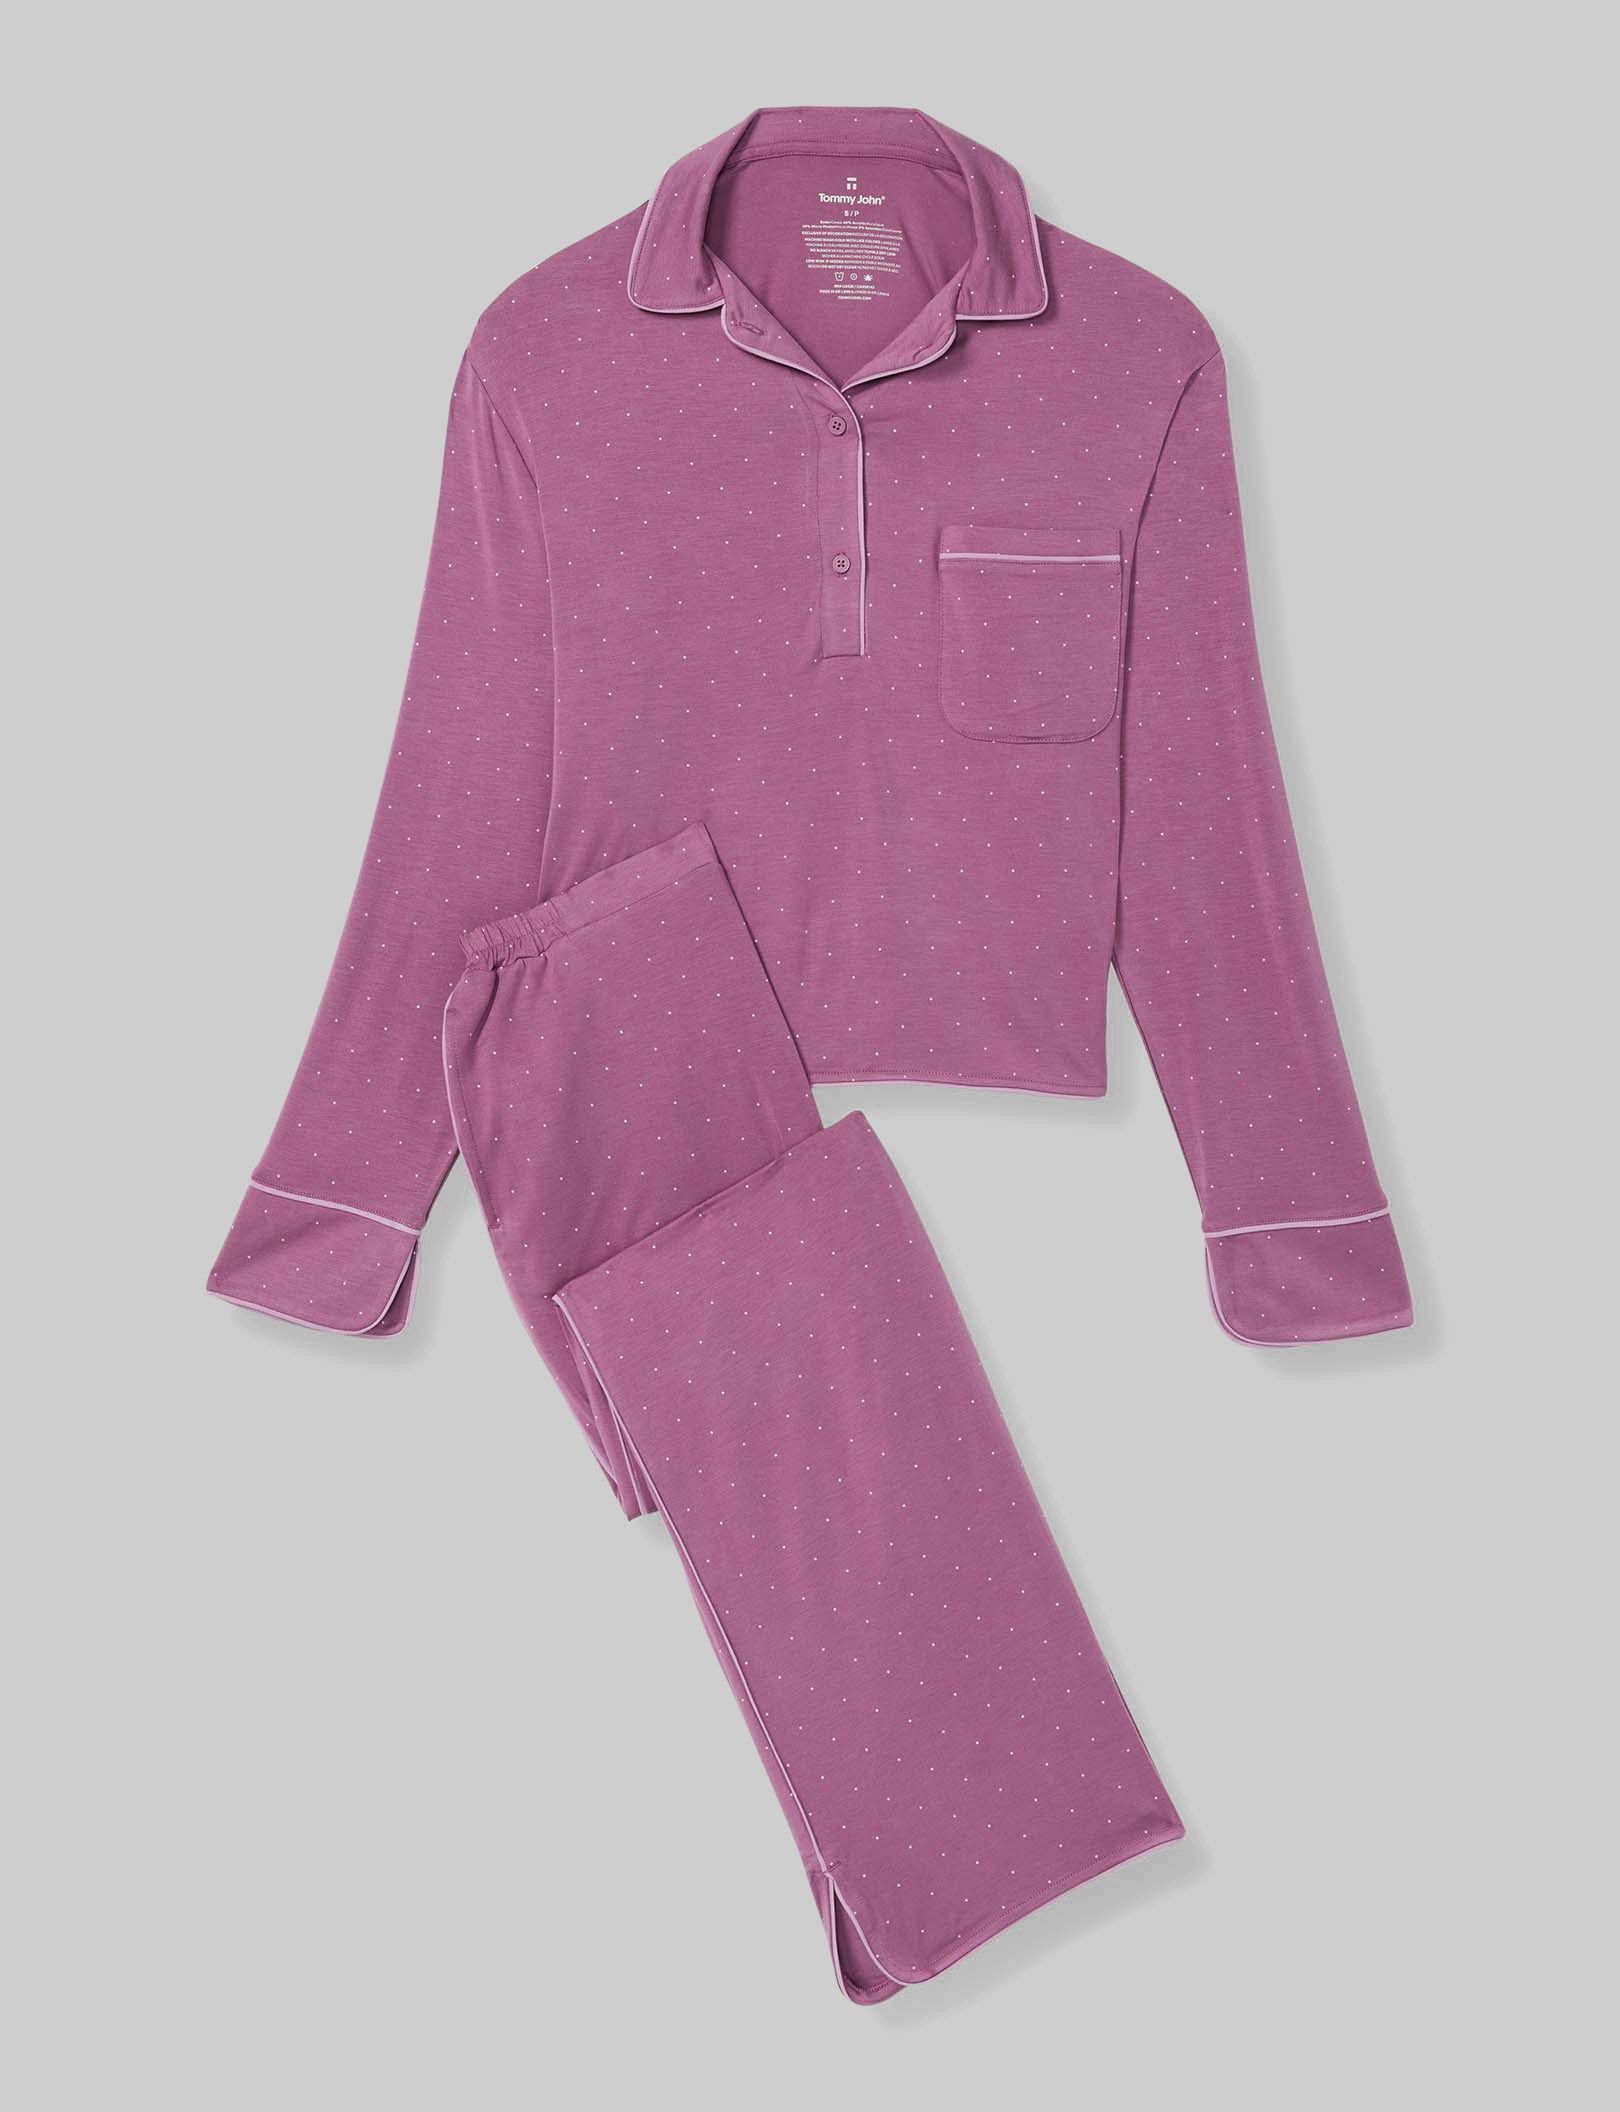 Women's Downtime Long Sleeve Pajama Top & Pant Set | Tommy John